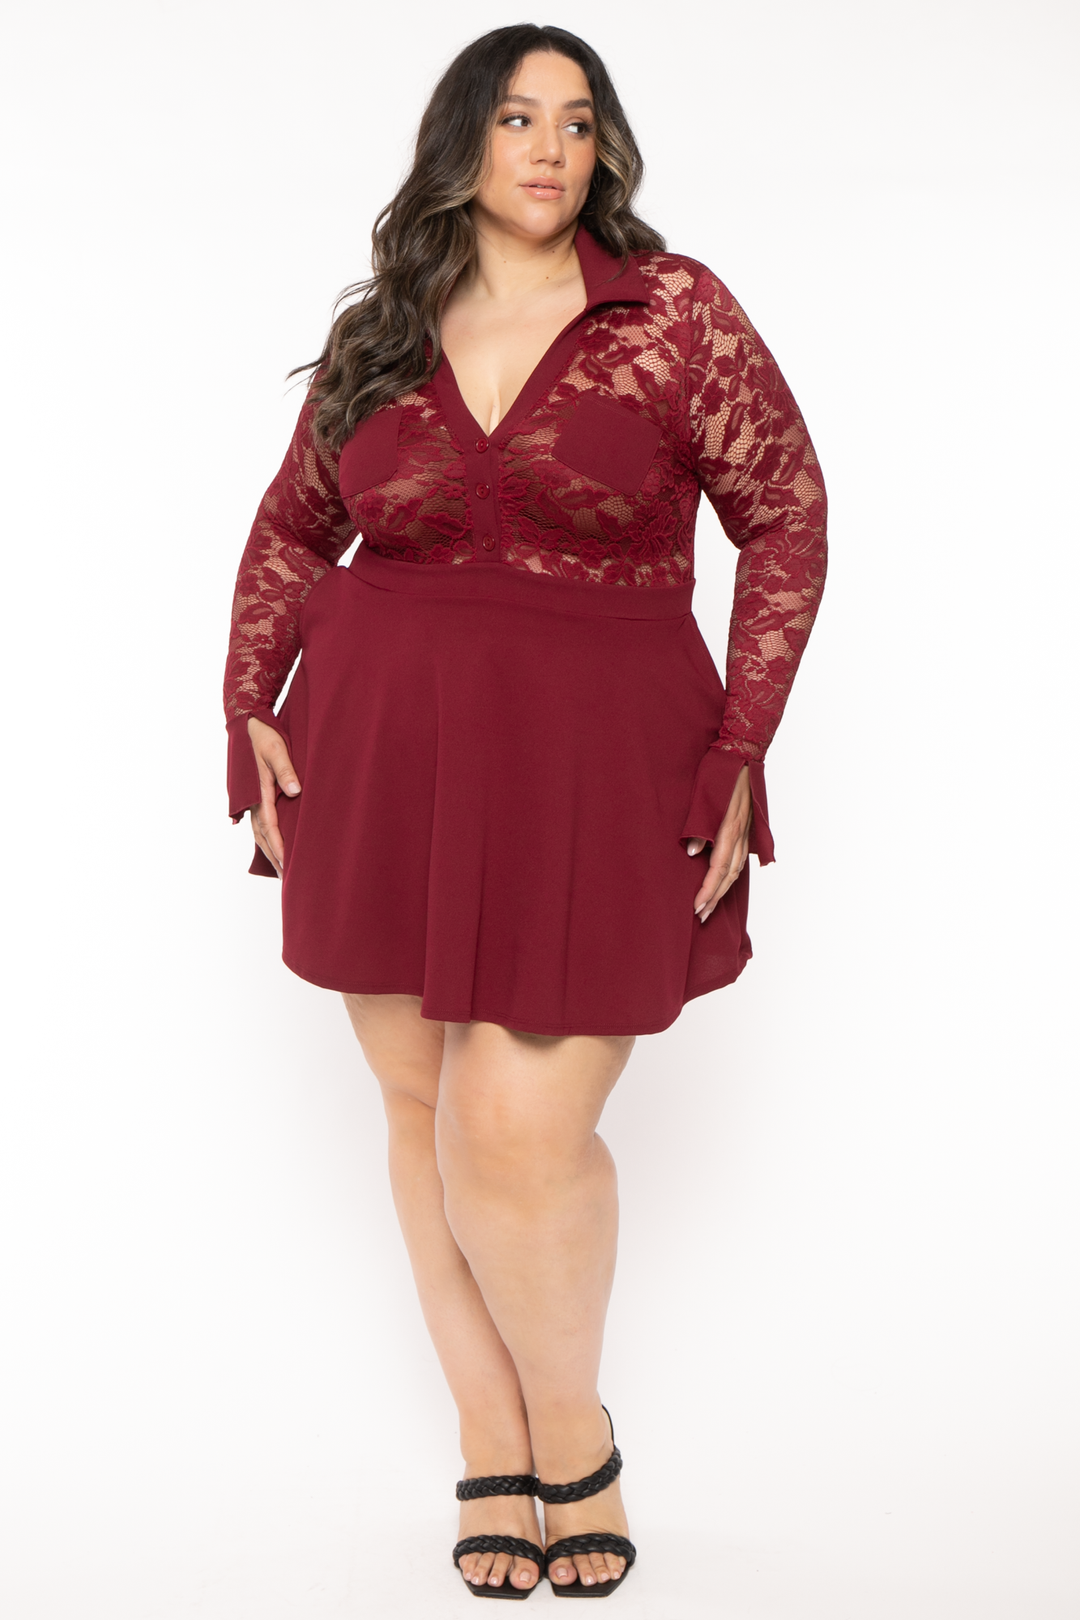 Women's Plus Size Dresses - Curvy Sense - burgundy